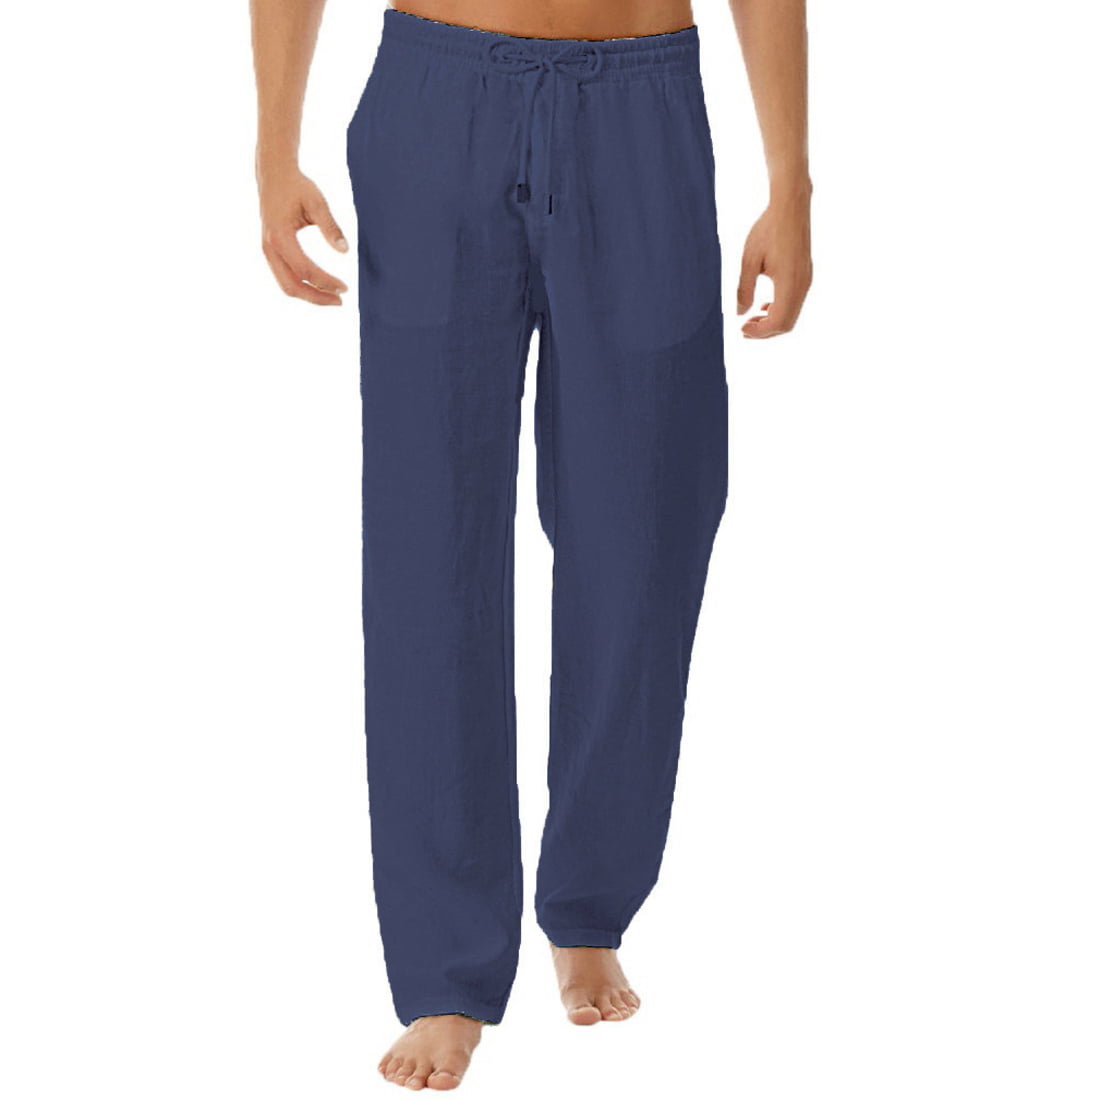 Hanerdun Men Male Solid Sleep Pants Pajama Bottoms with Pockets Navy ...